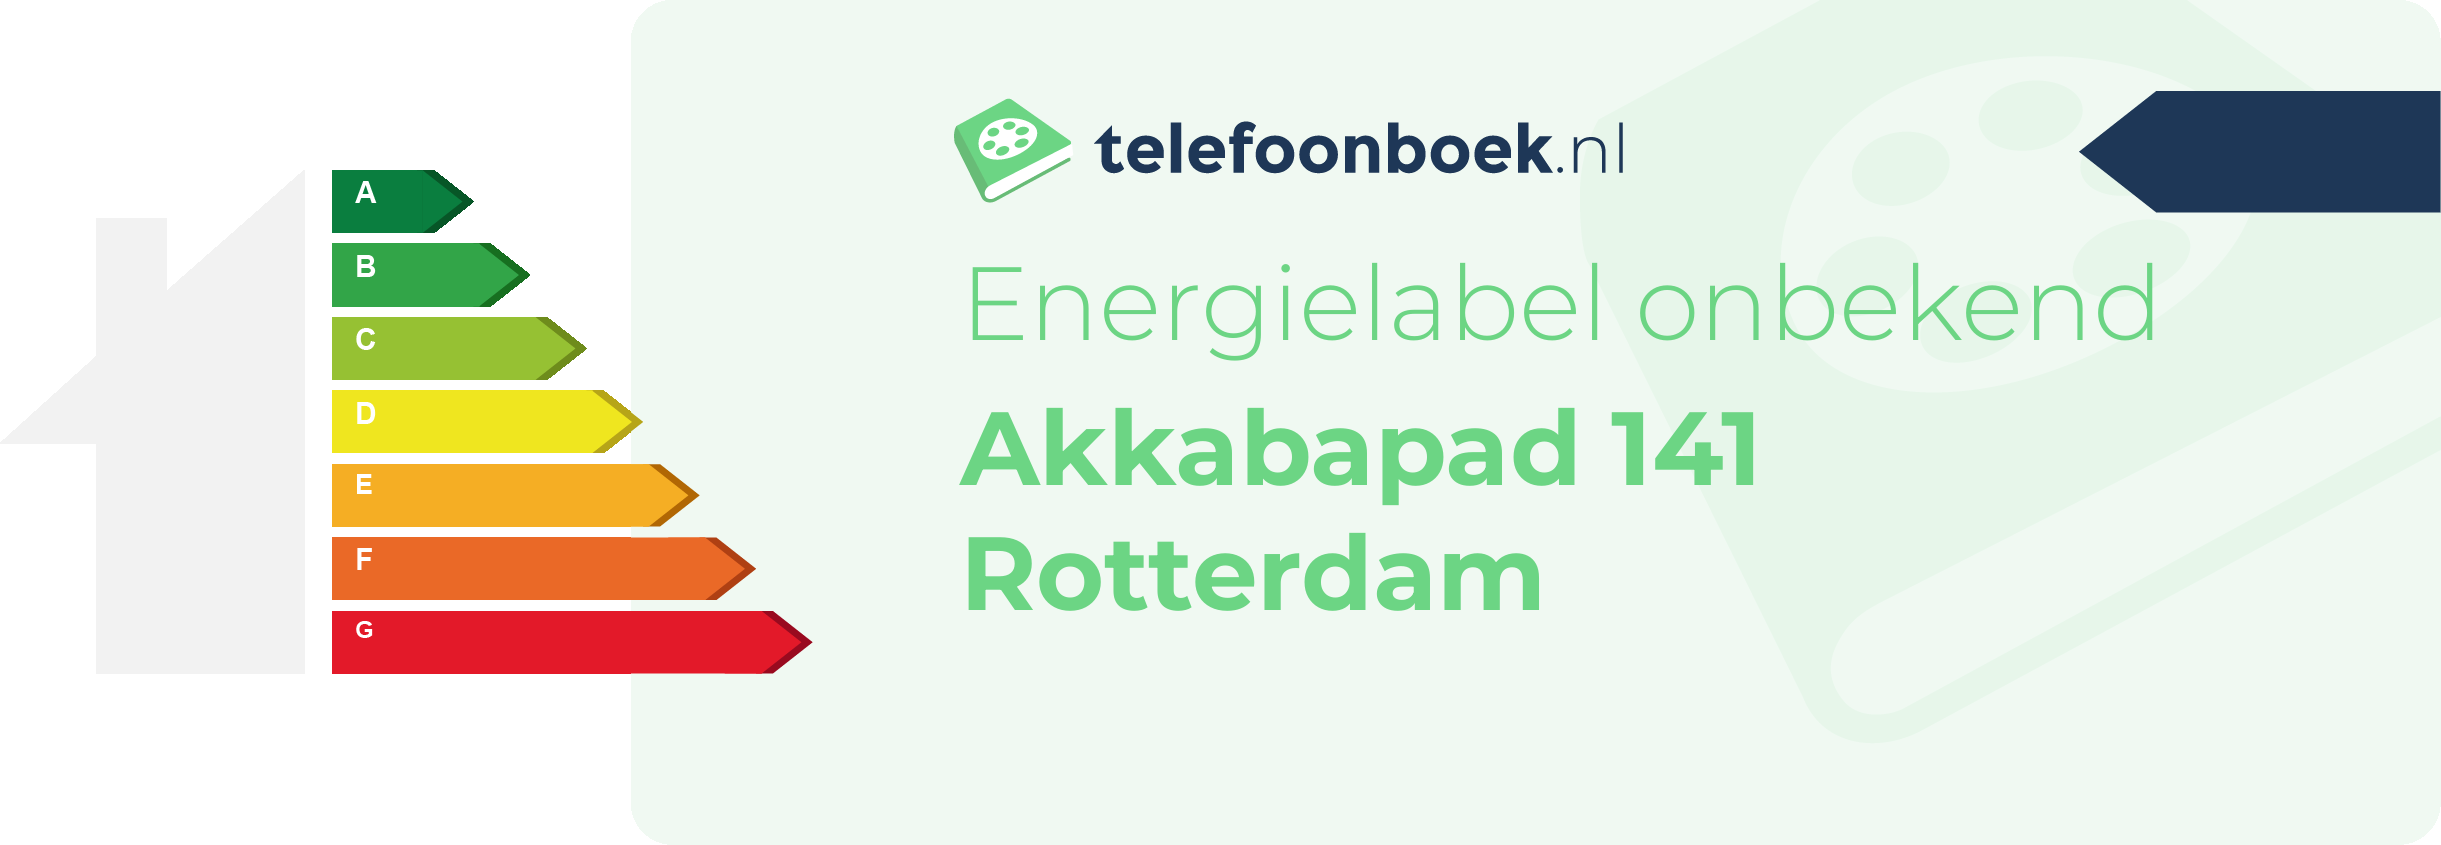 Energielabel Akkabapad 141 Rotterdam